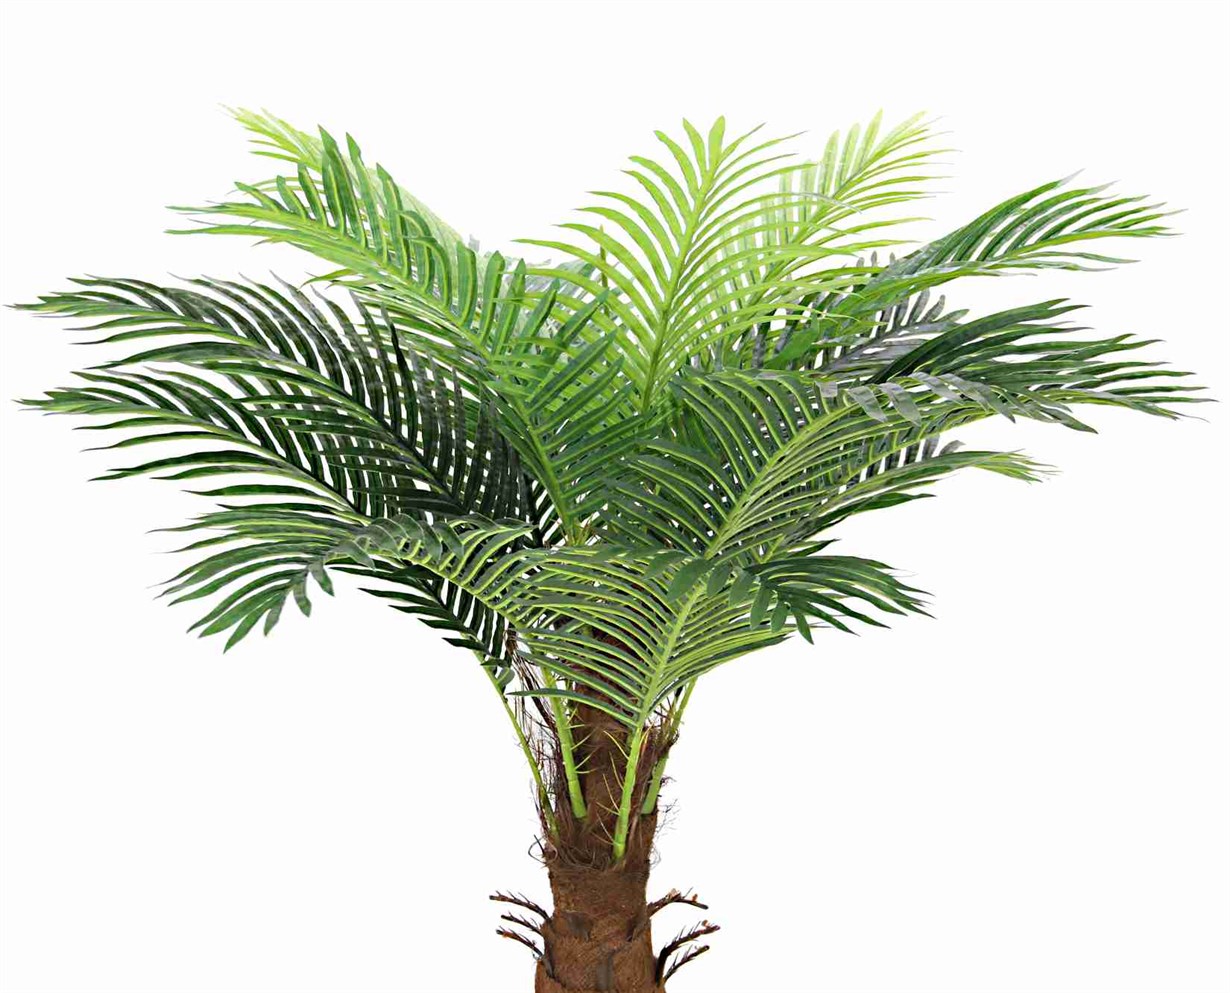 Yapay Areka Palmiye Ağacı 180 cm